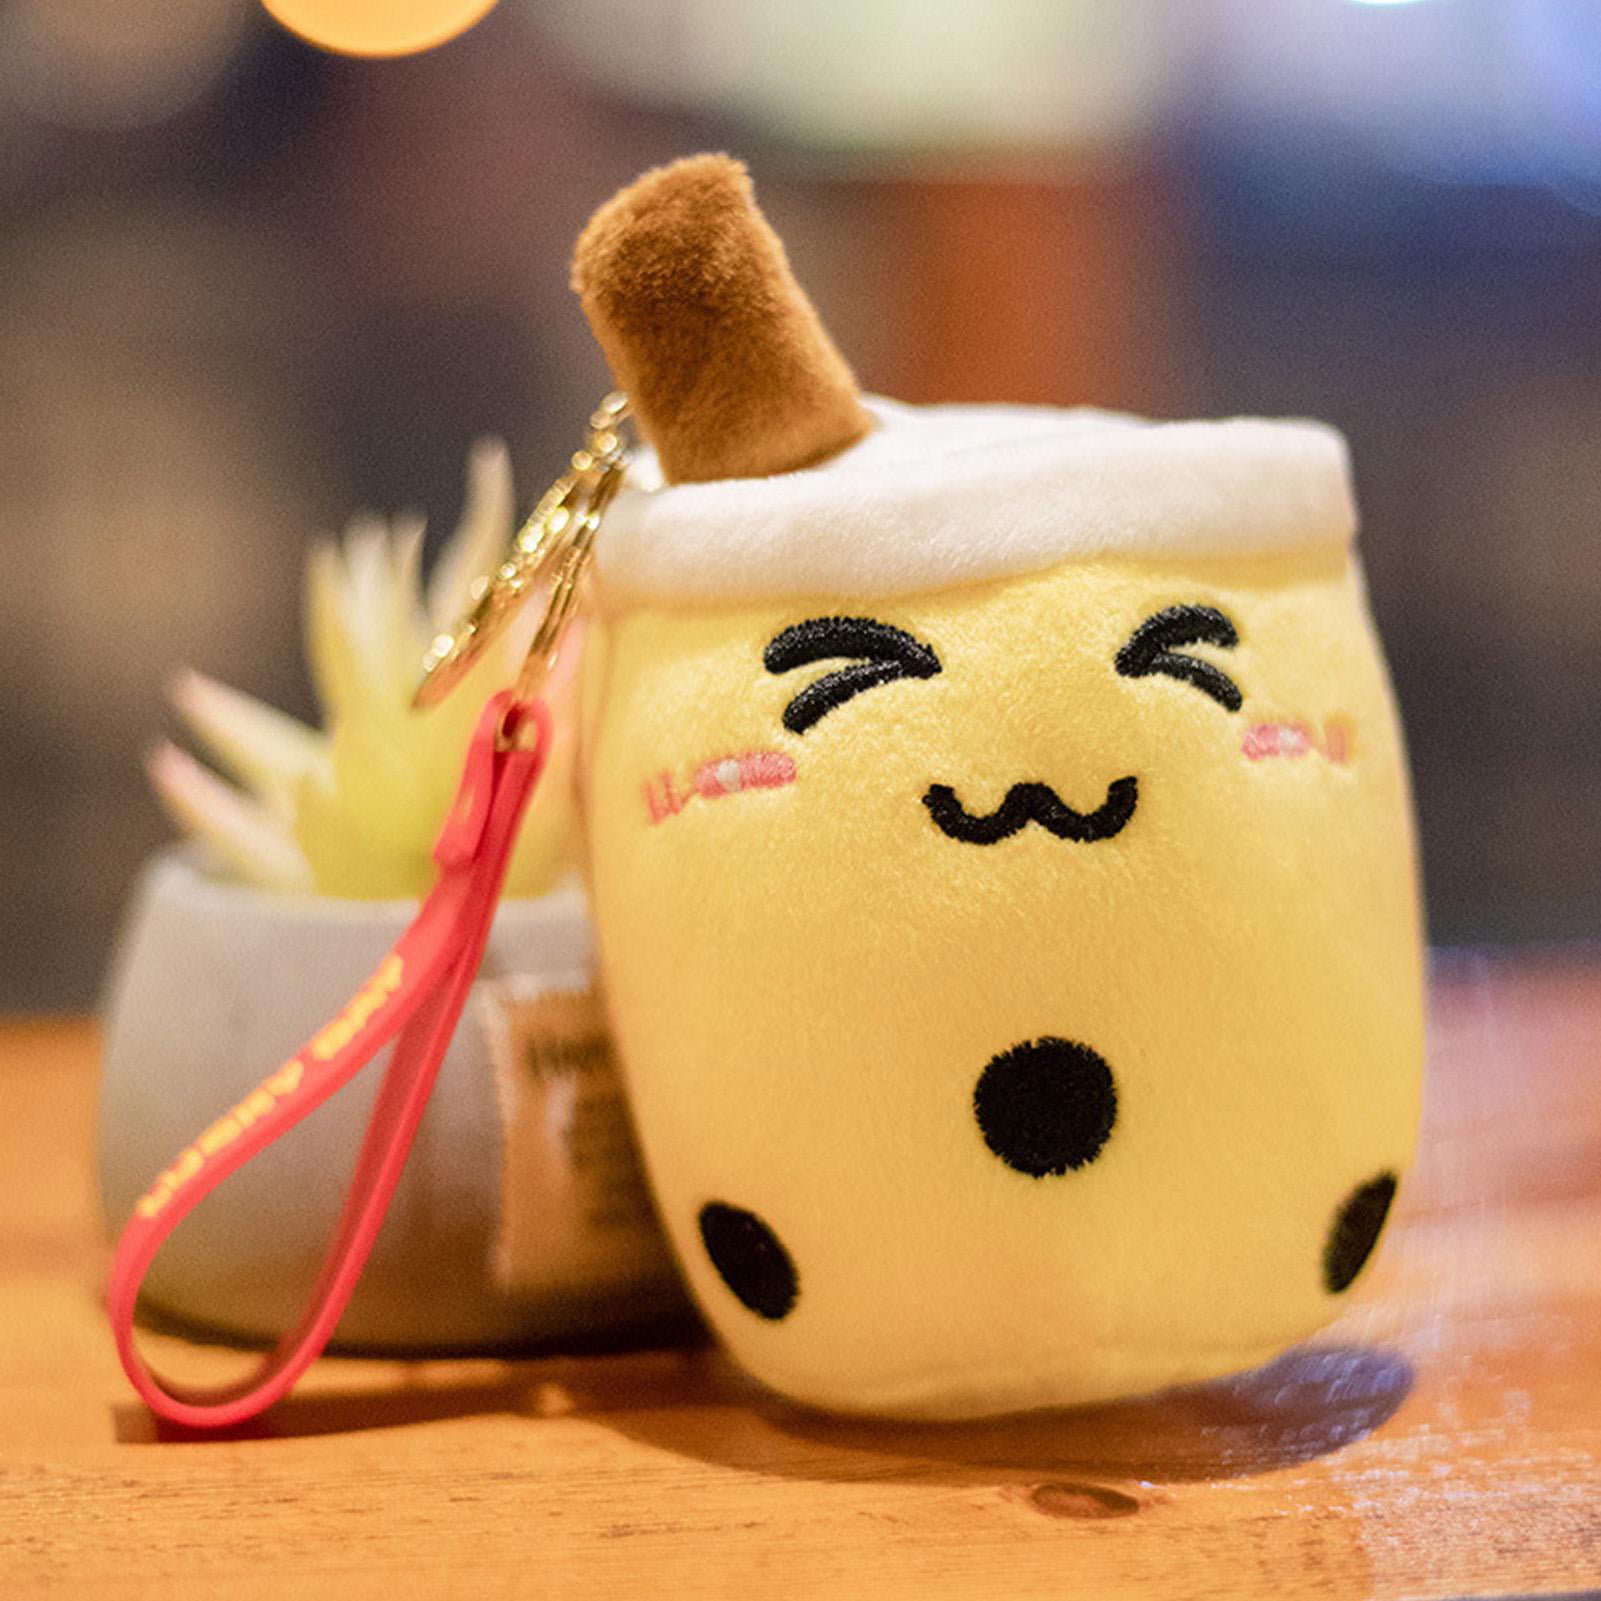 Squishmallow Keychains 3 pcs Cute Boba Cup Shape Plush Keyring